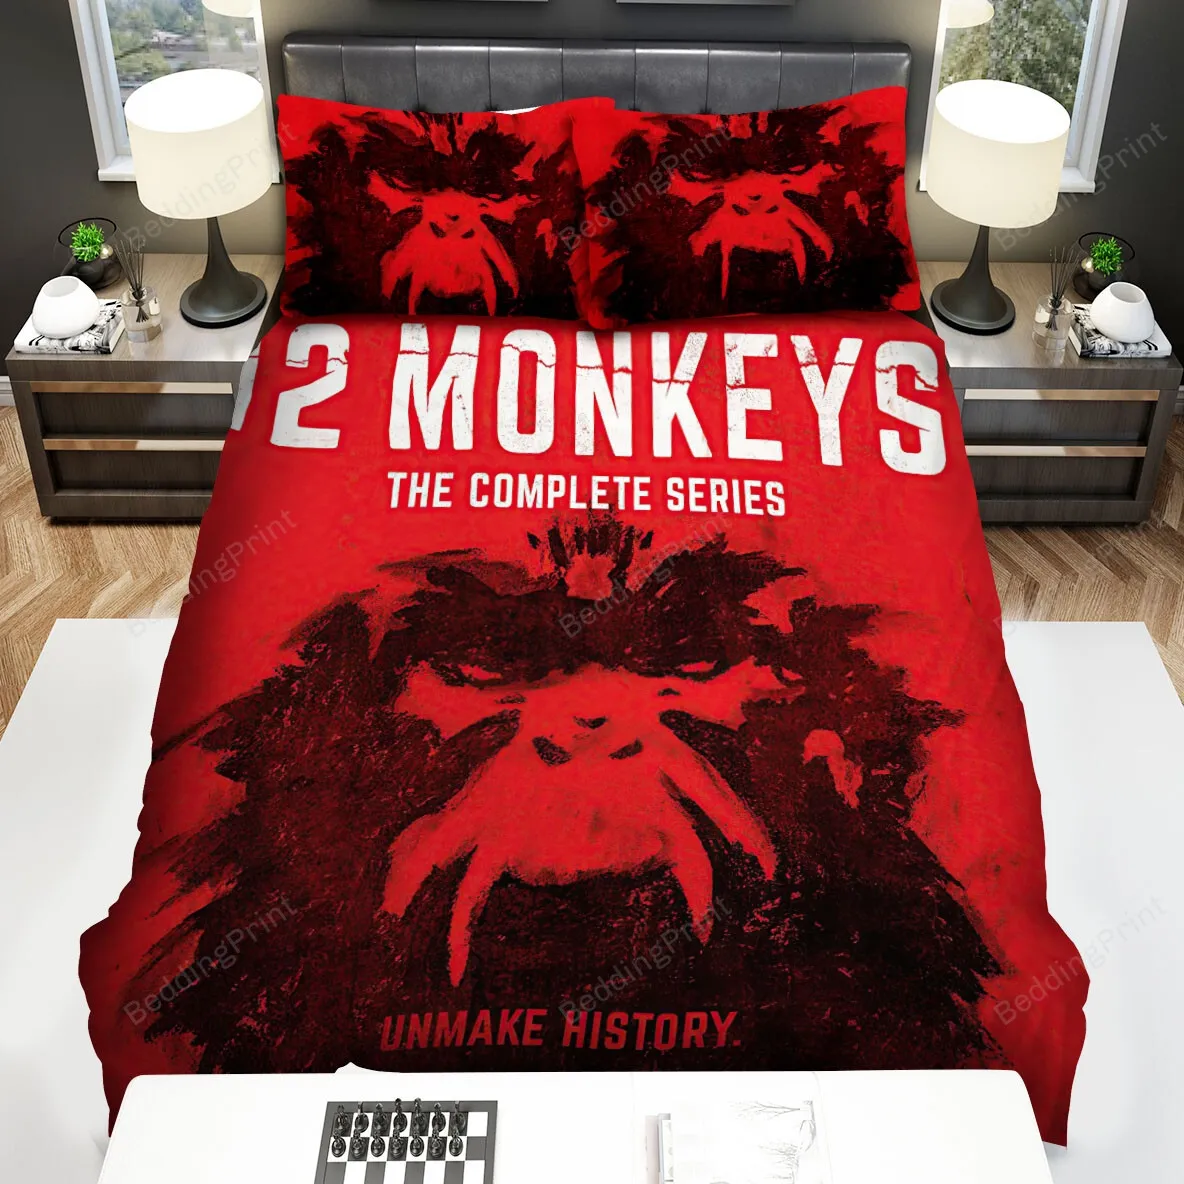 12 Monkeys (20152018) Unmake History Movie Poster Bed Sheets Spread Comforter Duvet Cover Bedding Sets